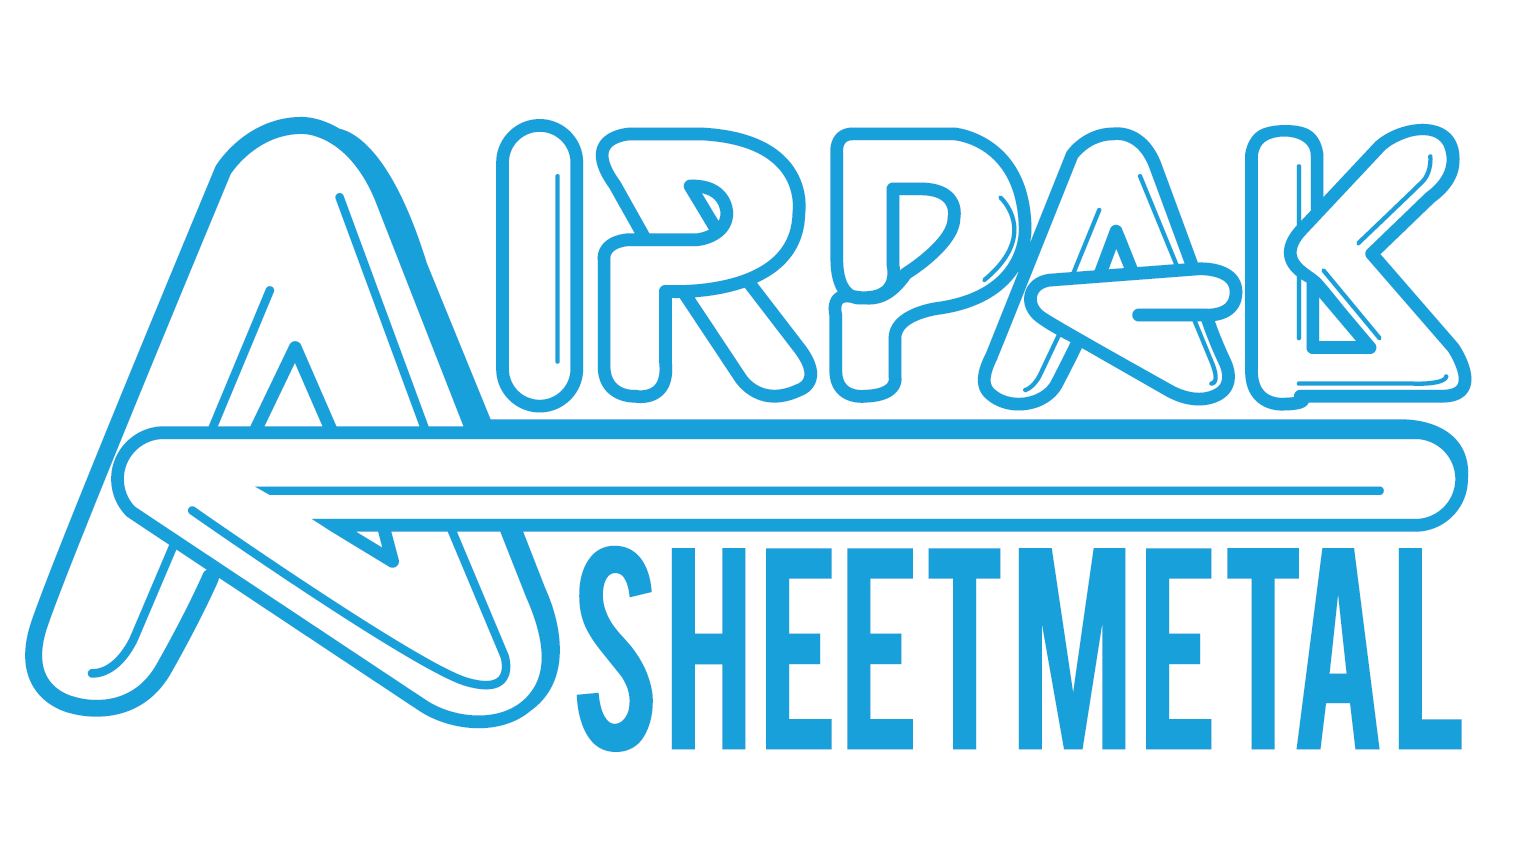 Airpak_Sheetmetal.JPG